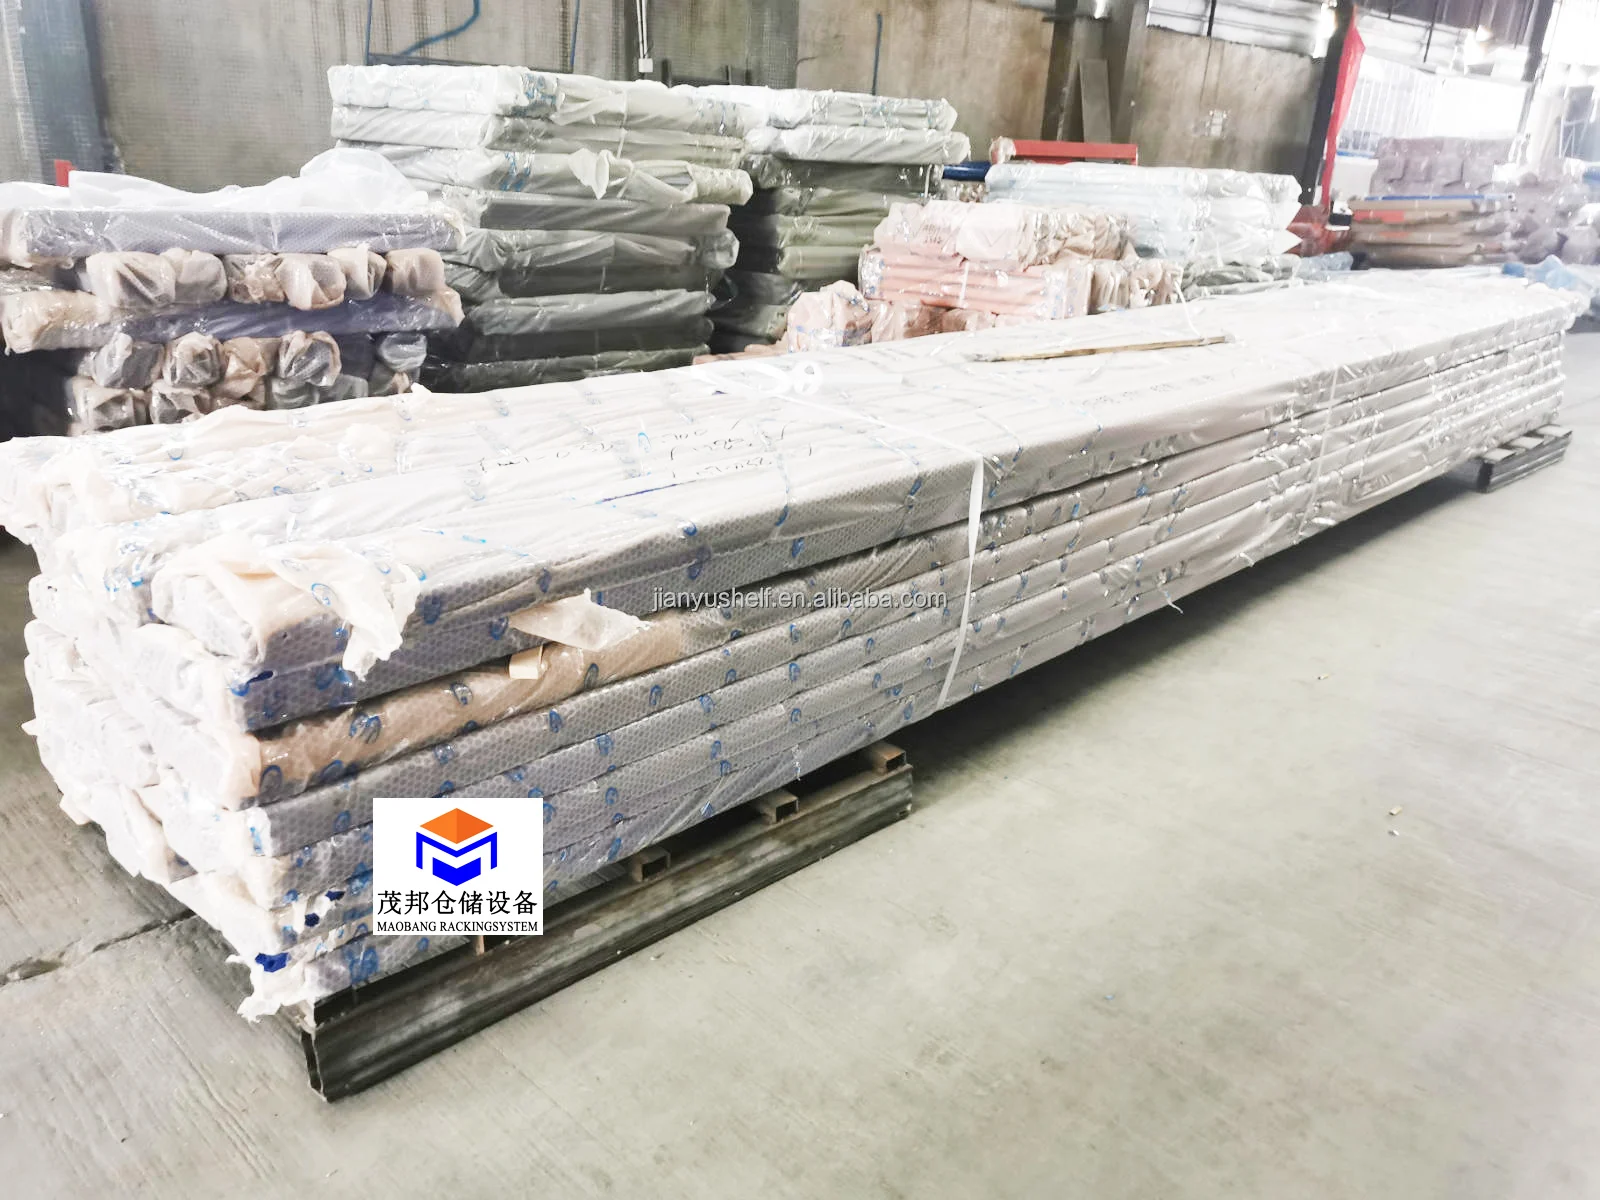 Heavy duty pallet racking metal 4 tier adjustable selective industrial warehouse storage racking supplier